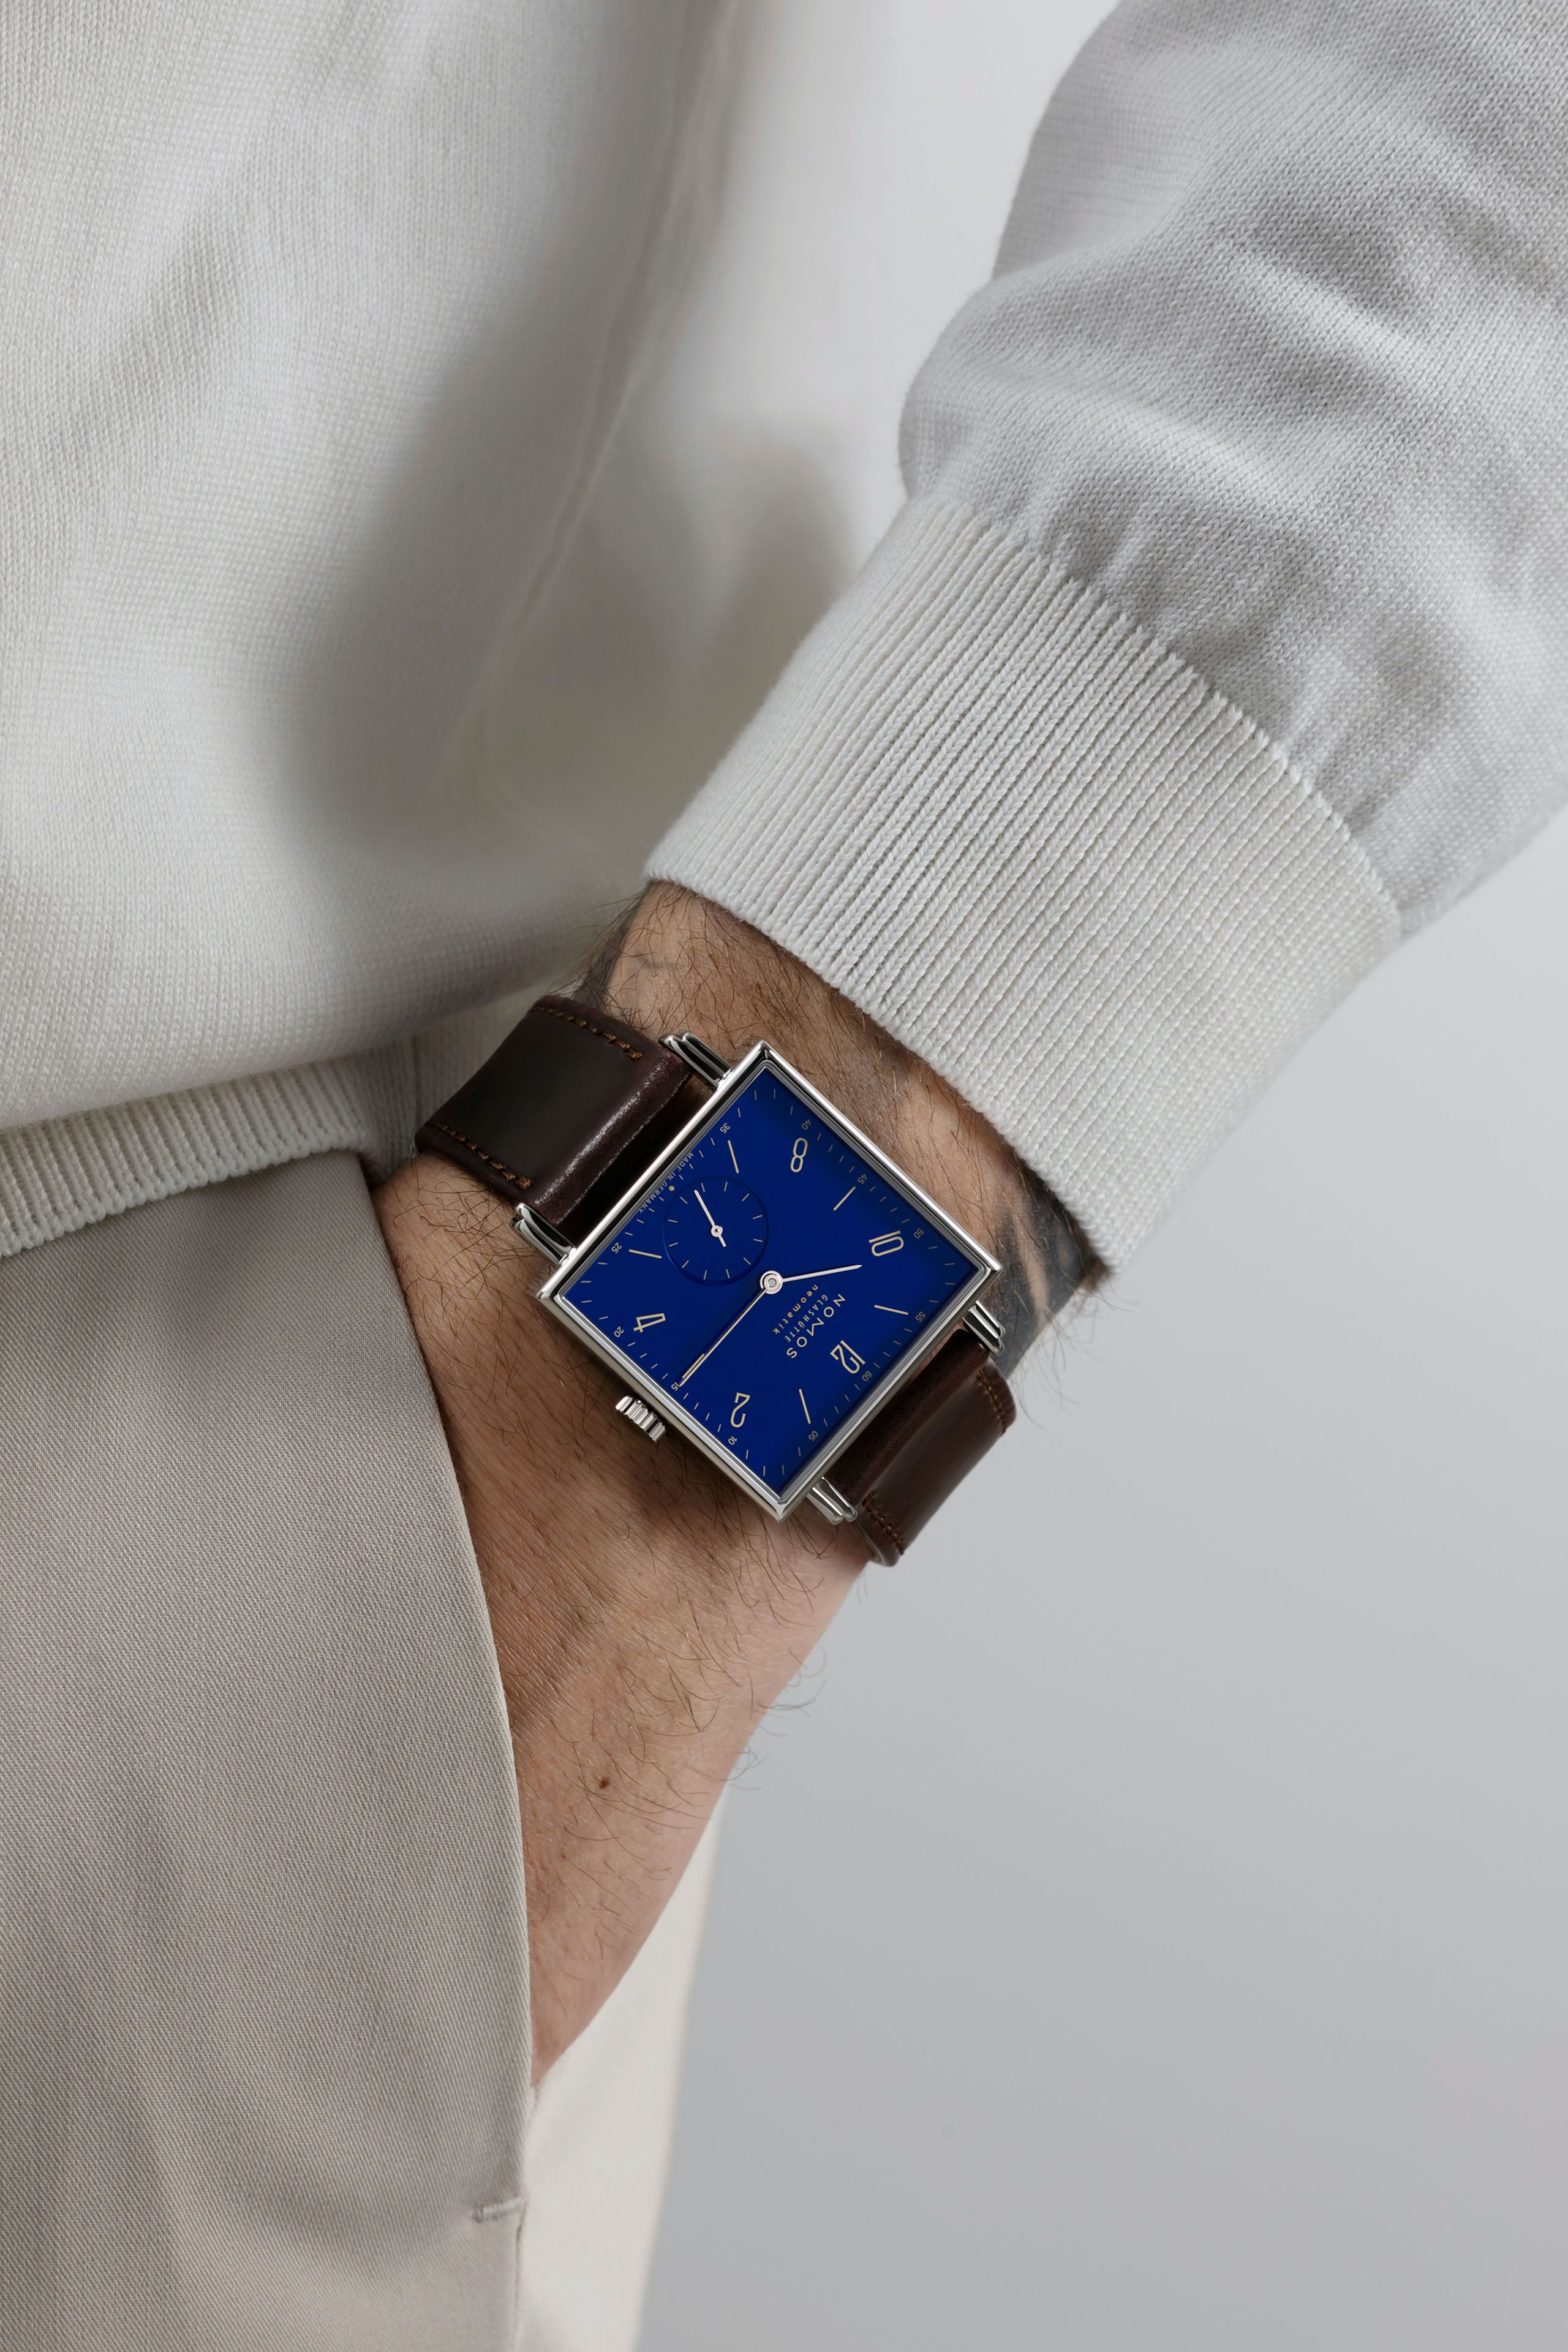 NOMOS Tetra neomatik 175 Years Watchmaking Glashütte Blue 421.S3 7